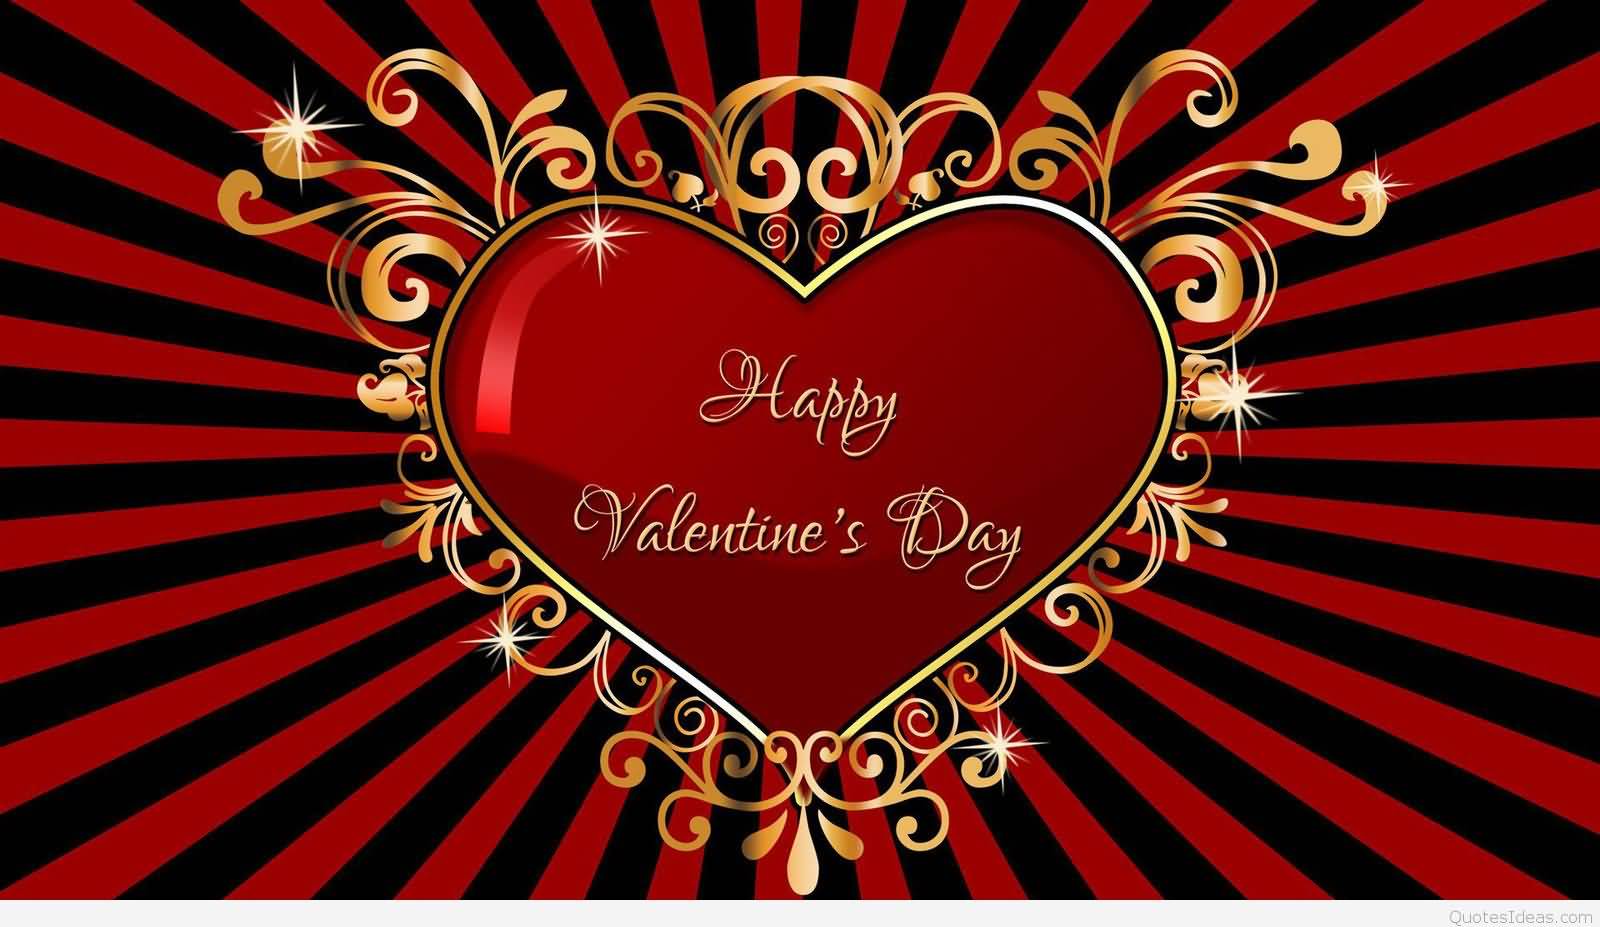 Happy Valentine’s Day 2017 Heart Design